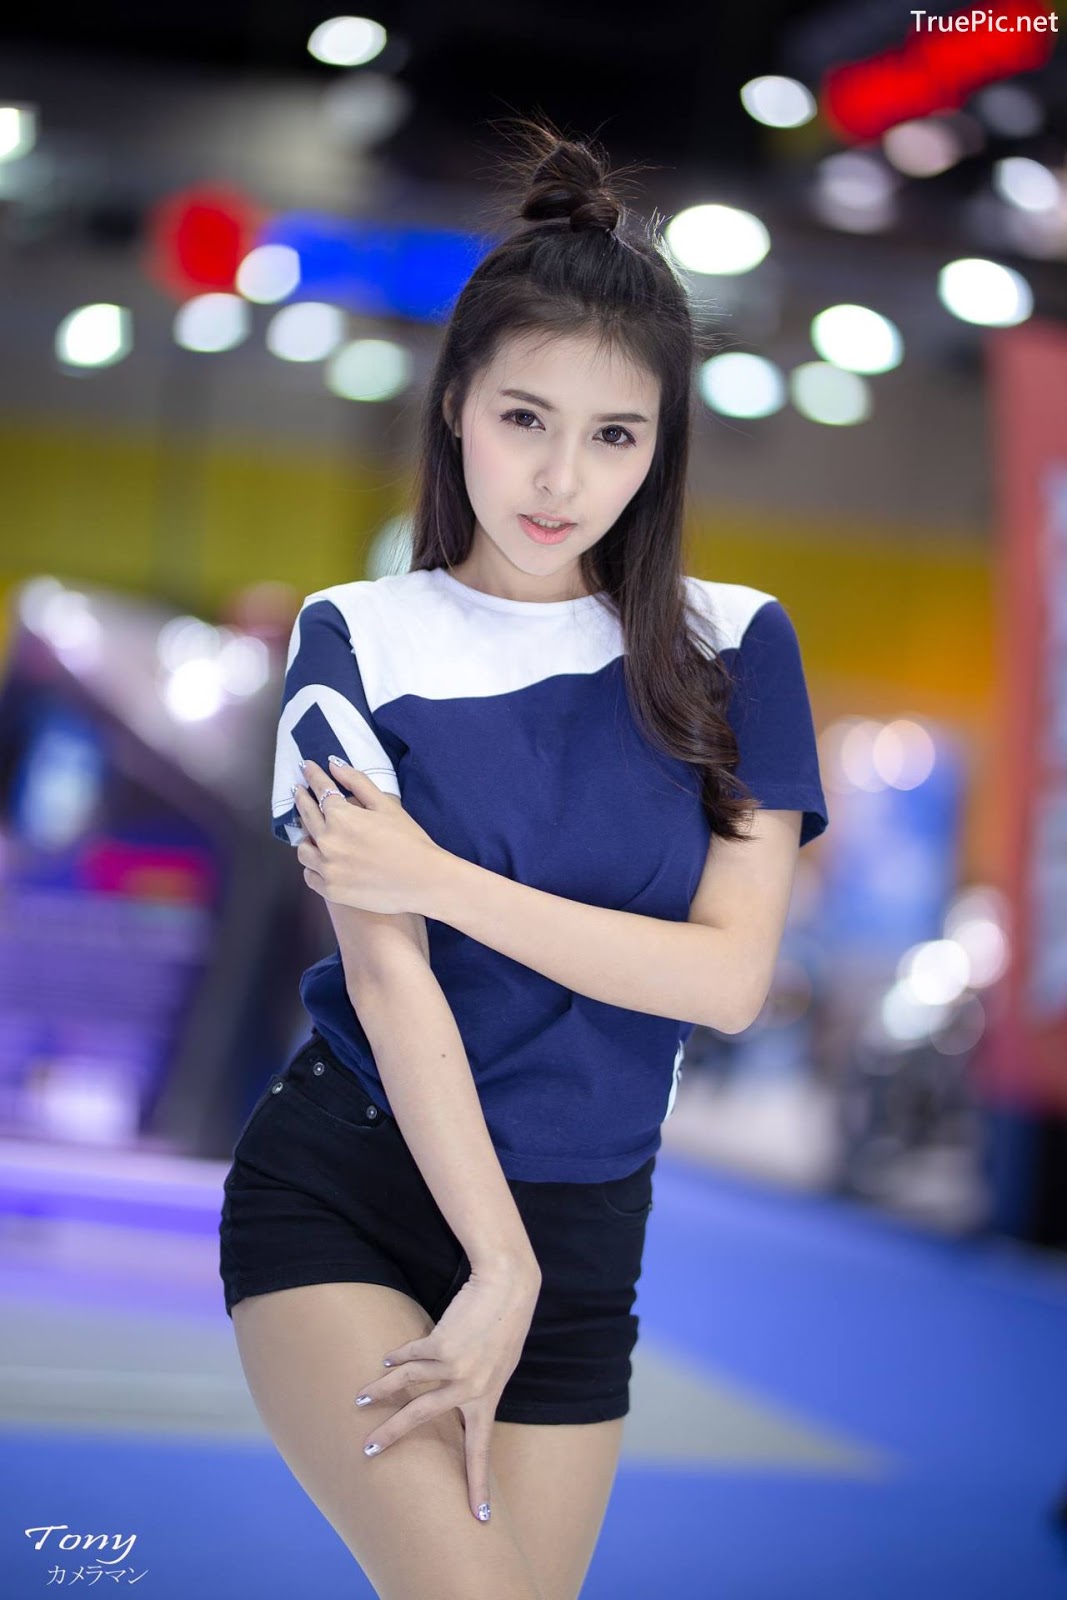 Image-Thailand-Hot-Model-Thai-Racing-Girl-At-Big-Motor-2018-TruePic.net- Picture-73